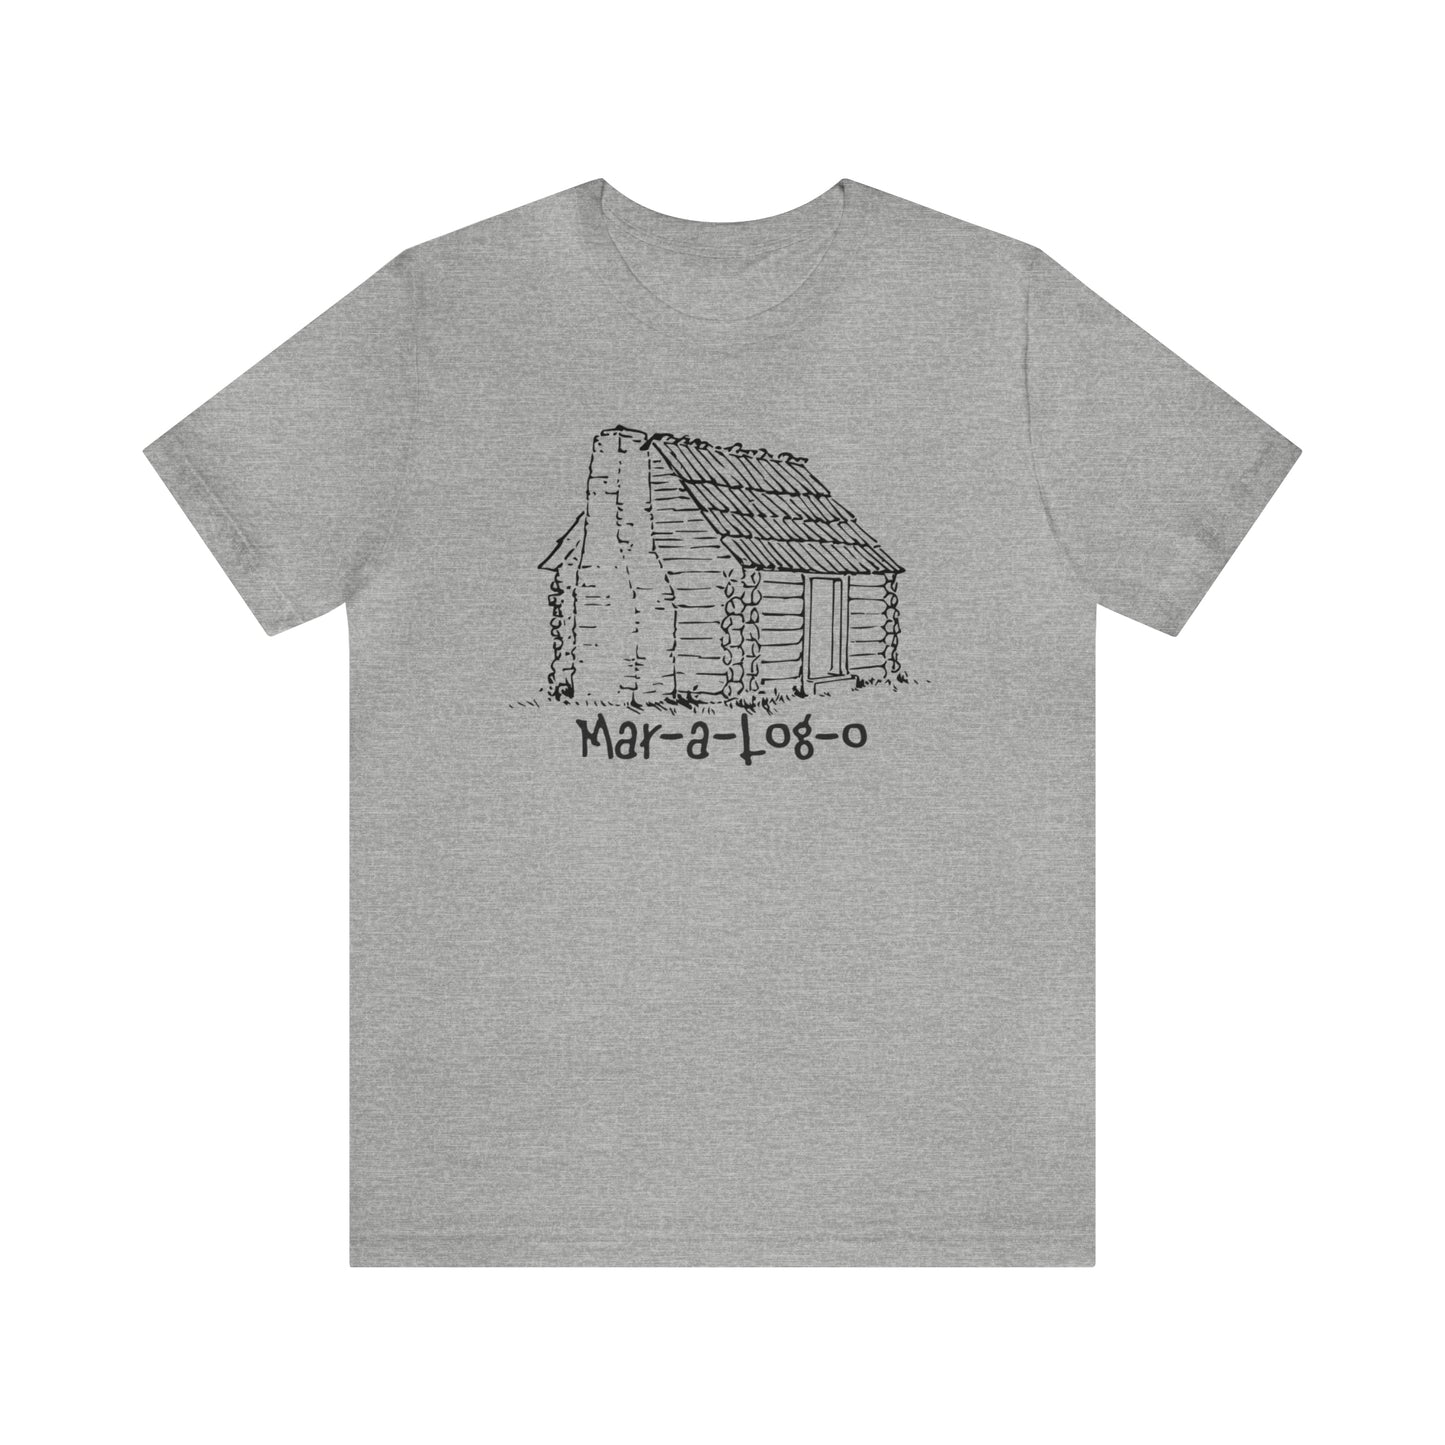 Mar-a-Log-o - Unisex T-Shirt